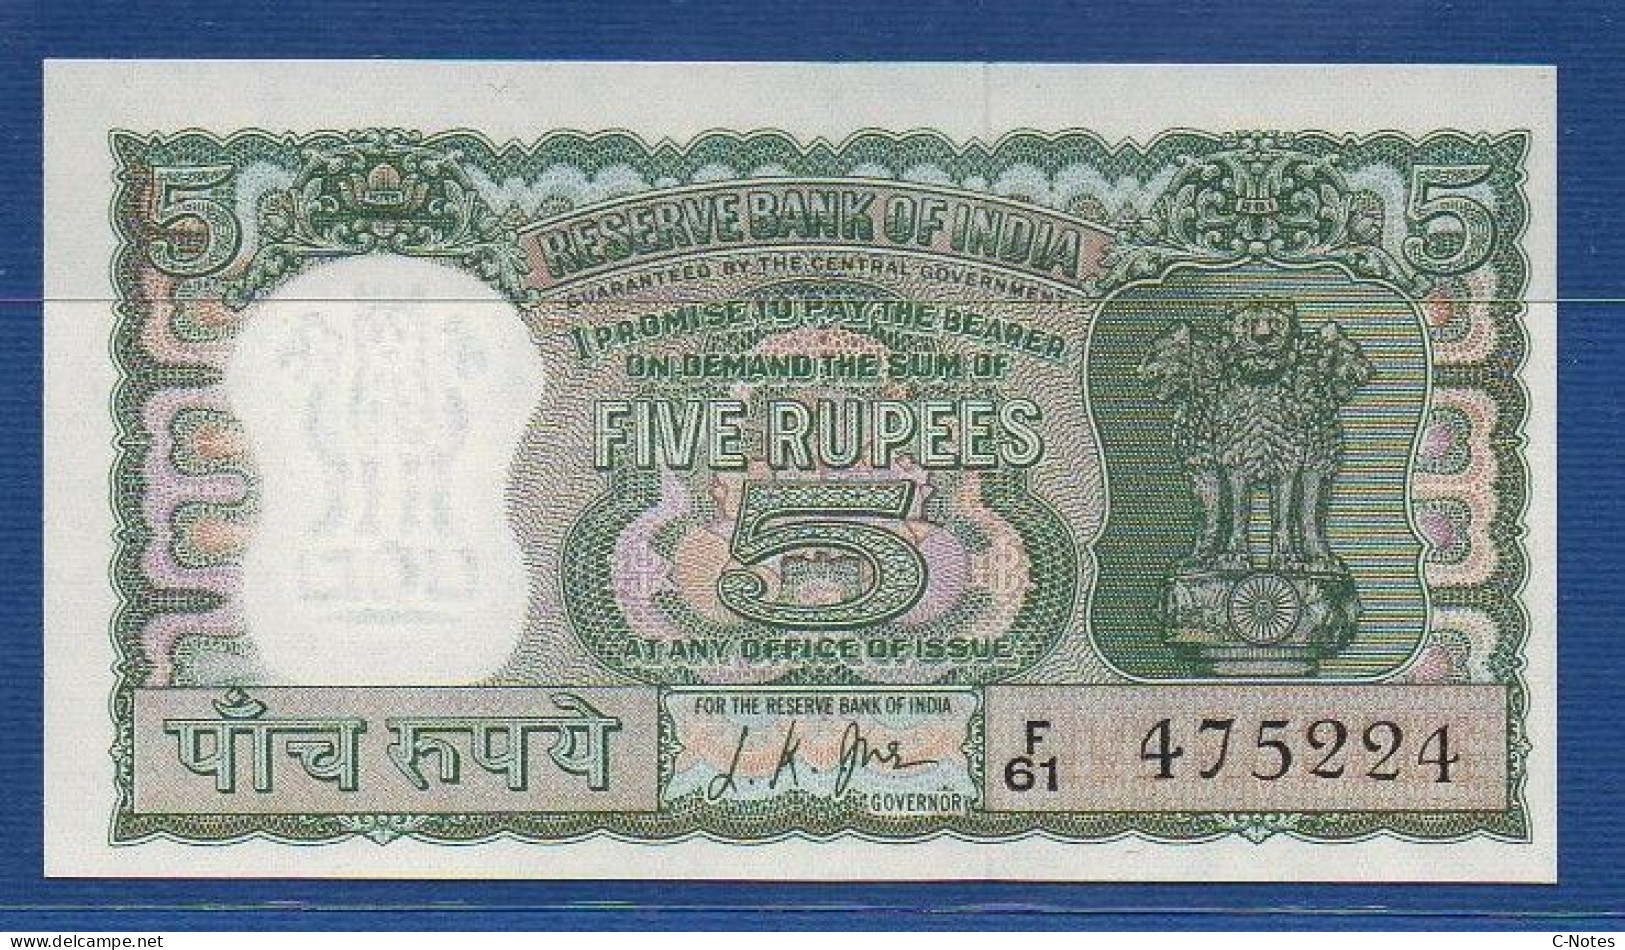 INDIA - P. 54b – 5 Rupees ND, UNC,  Serie F61 475224 - Signature: L. K. Jha (1967-1970) - India